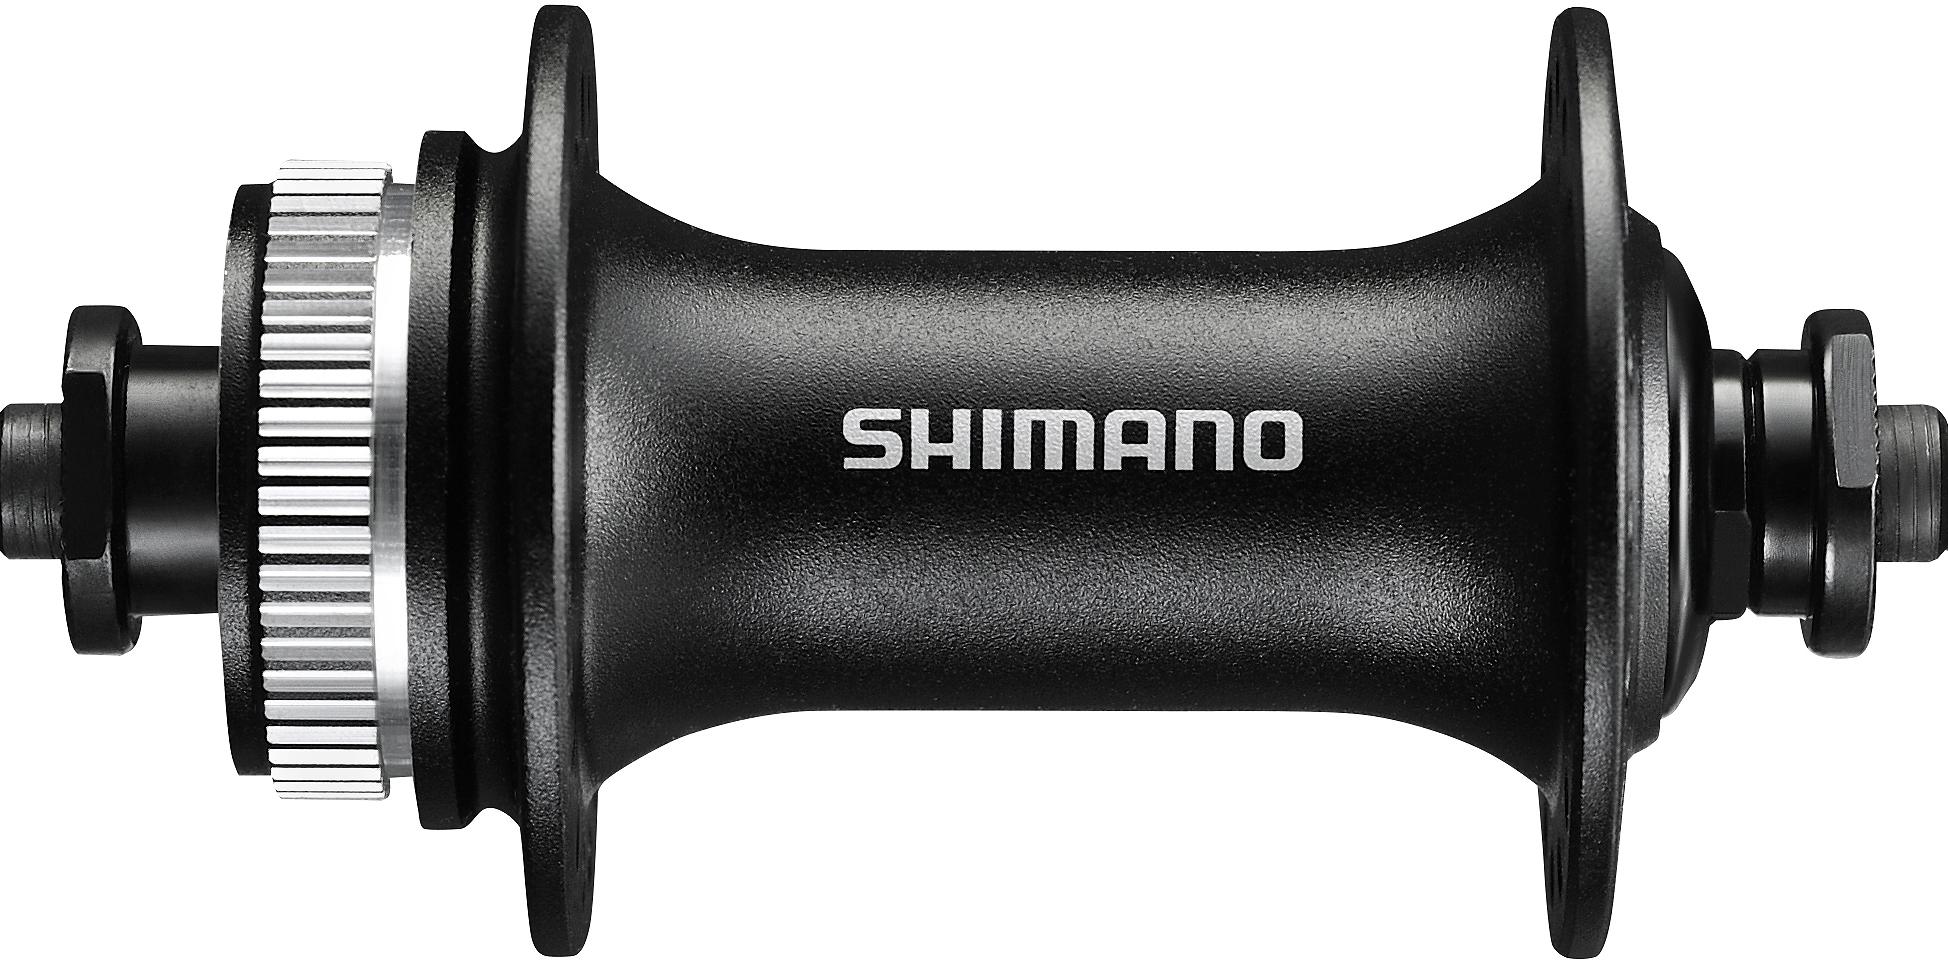 Shimano Hb-m3050 Front Disc Hub - Black